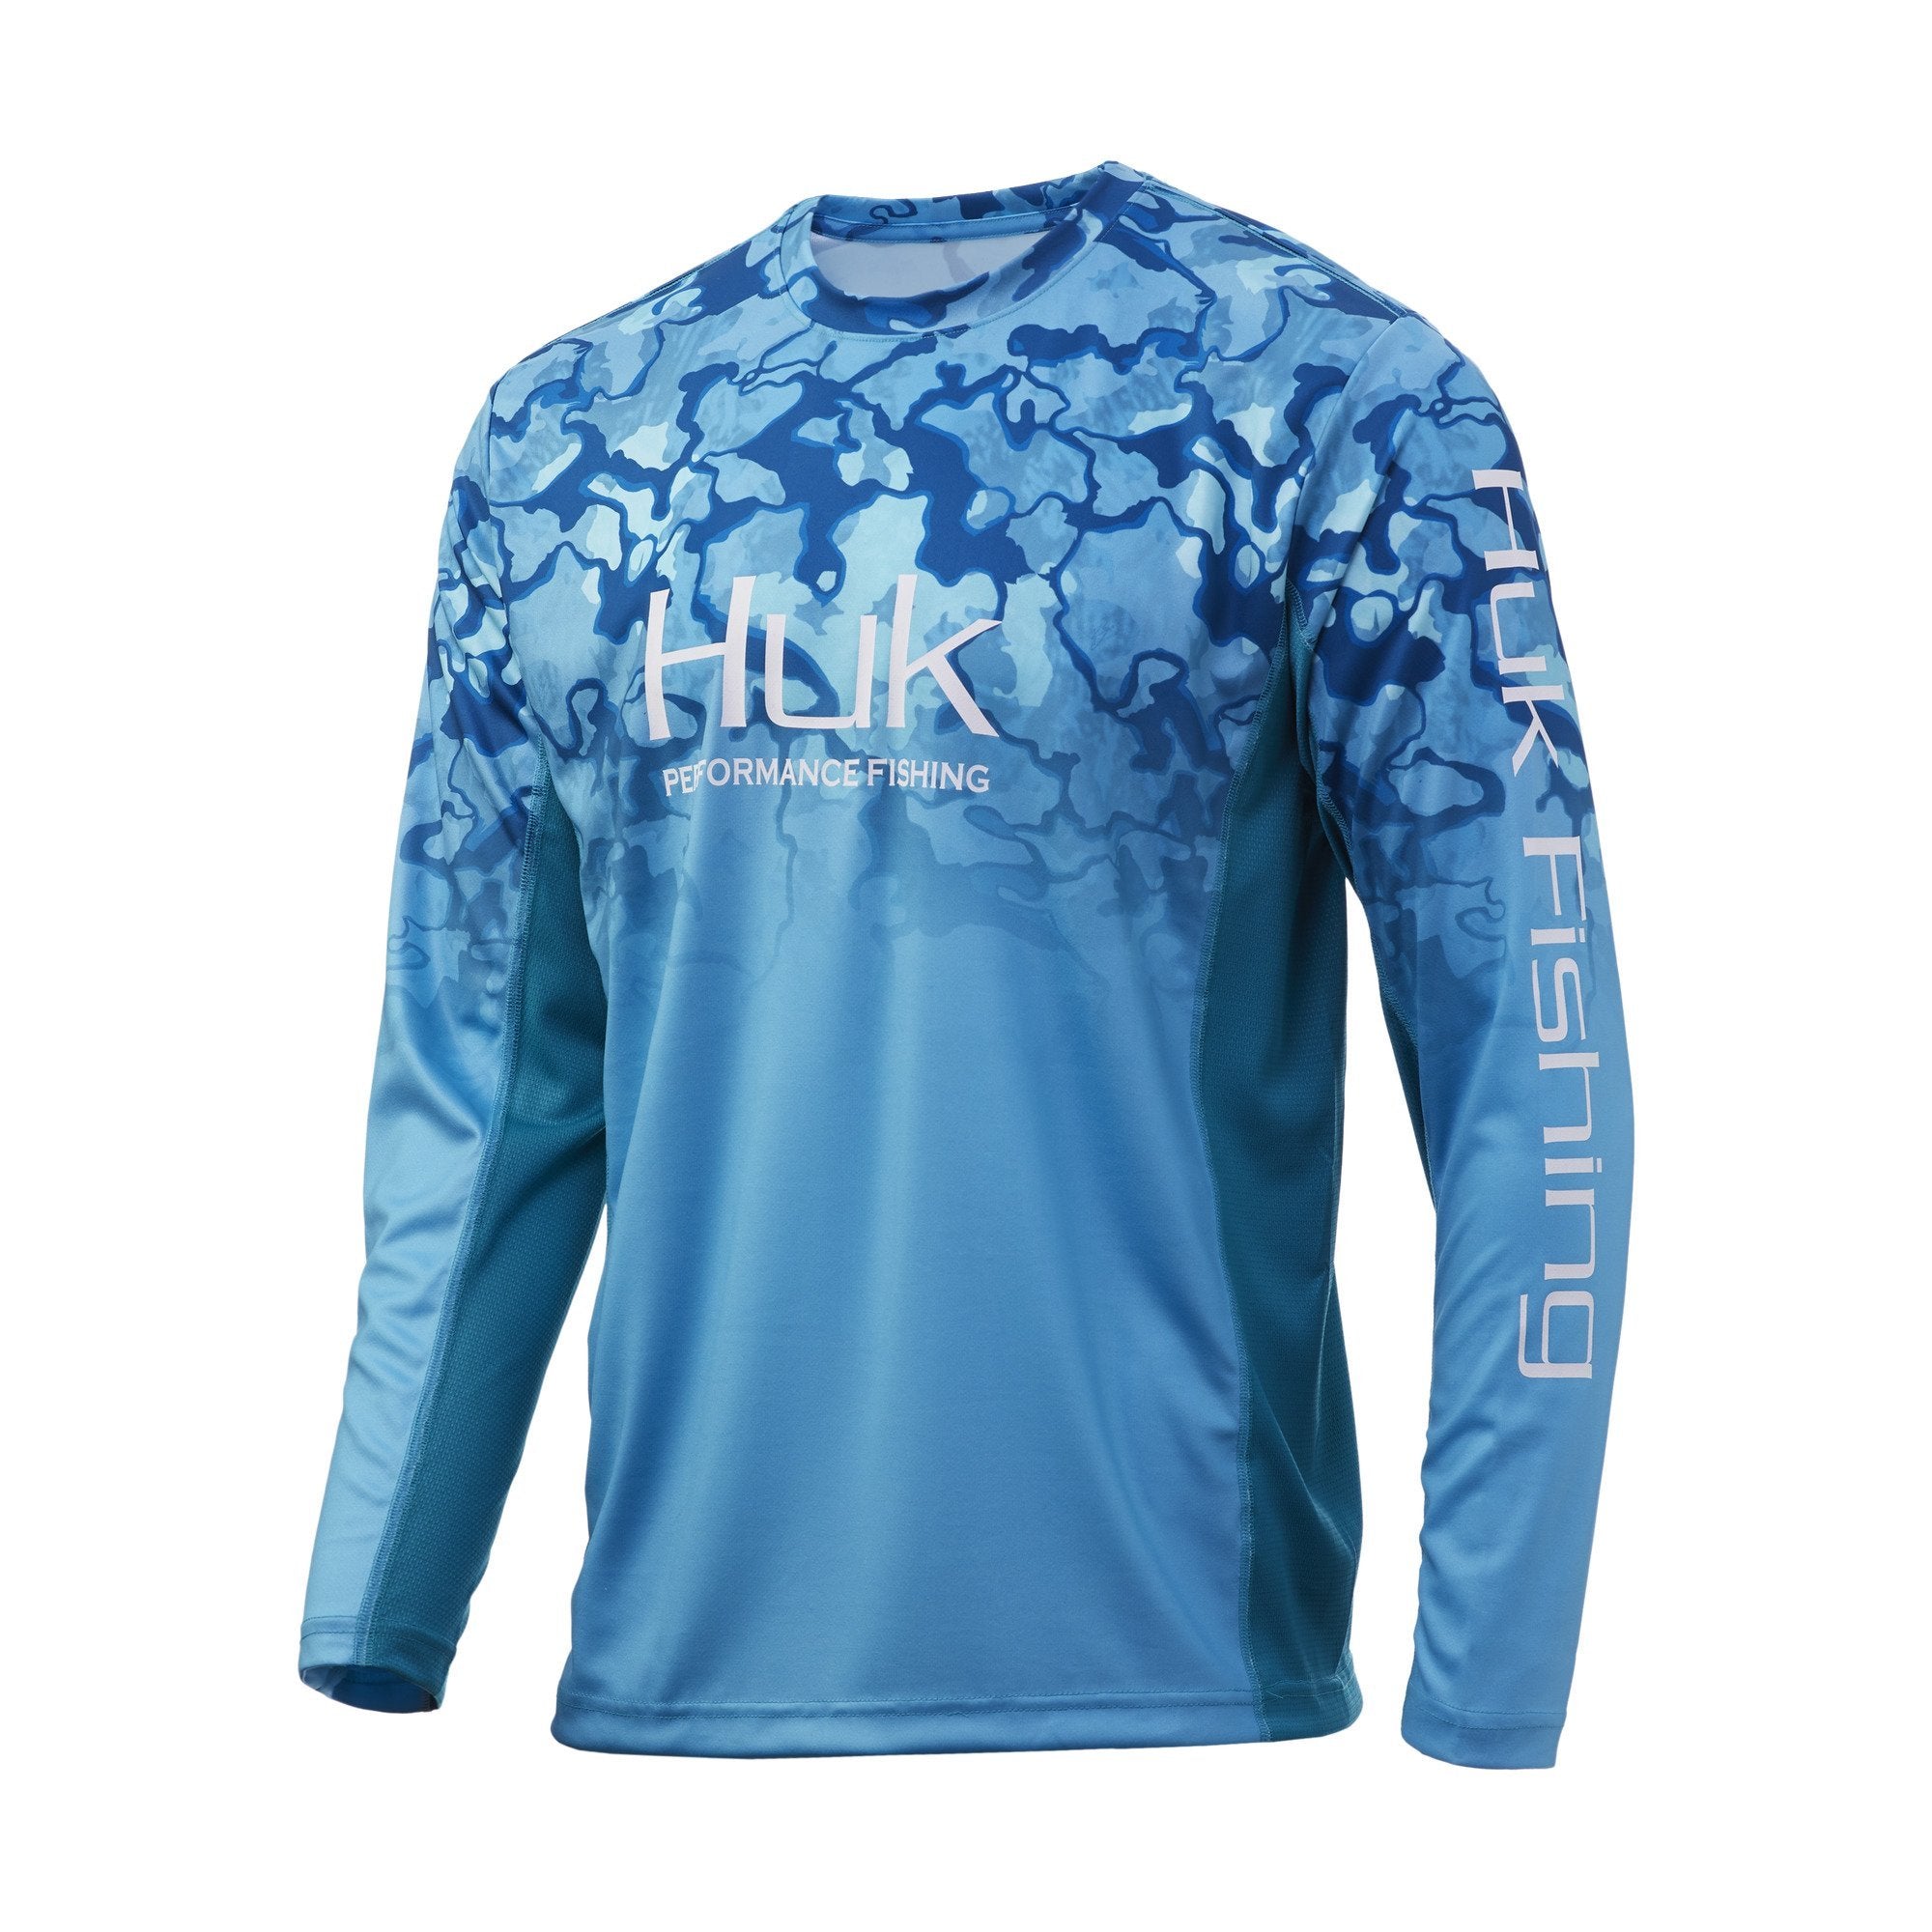 Huk Performance Fishing Men's Double Header Long Sleeve Shirt - Ice Blue